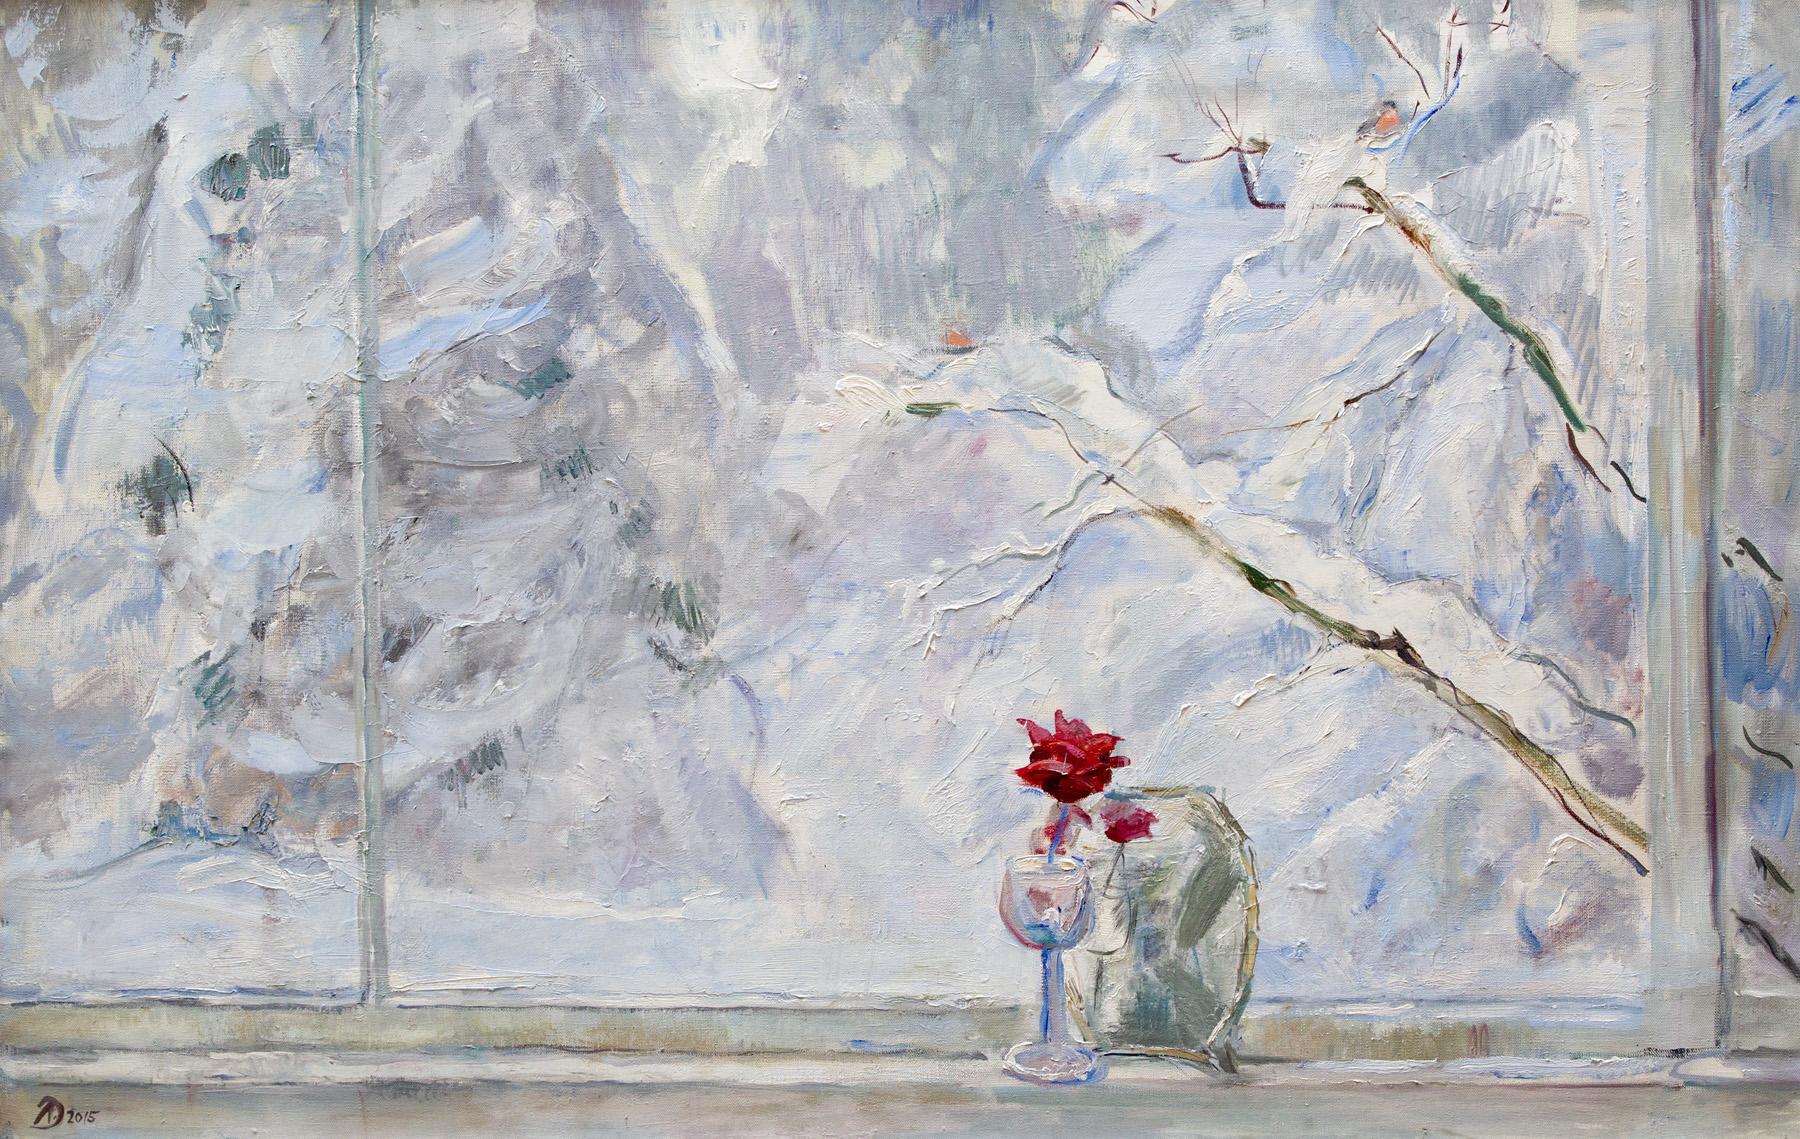 Snow-covered New Year. Original modern art painting